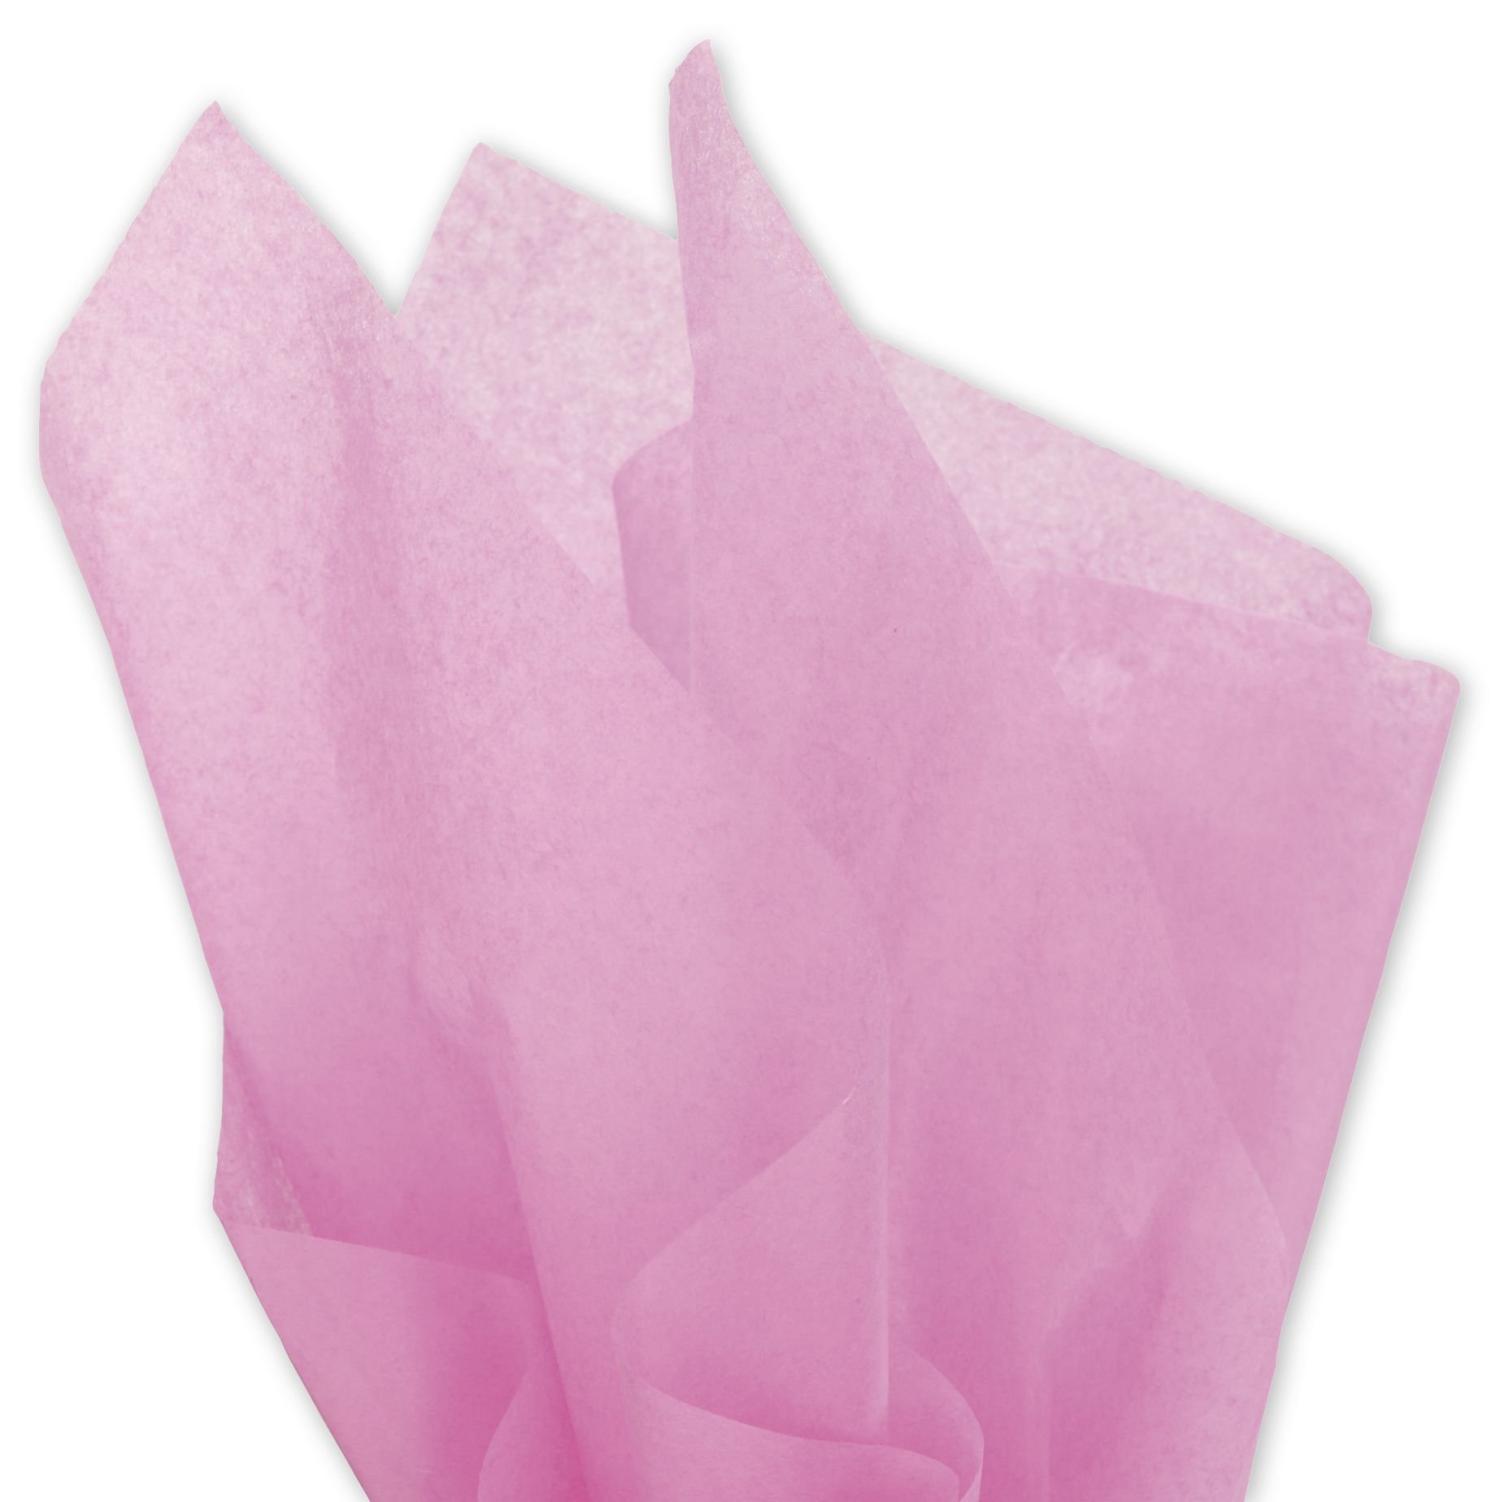 Brand New Bubblegum Pink Bulk Tissue Paper 15 Inch x 20 Inch - 100 Sheets